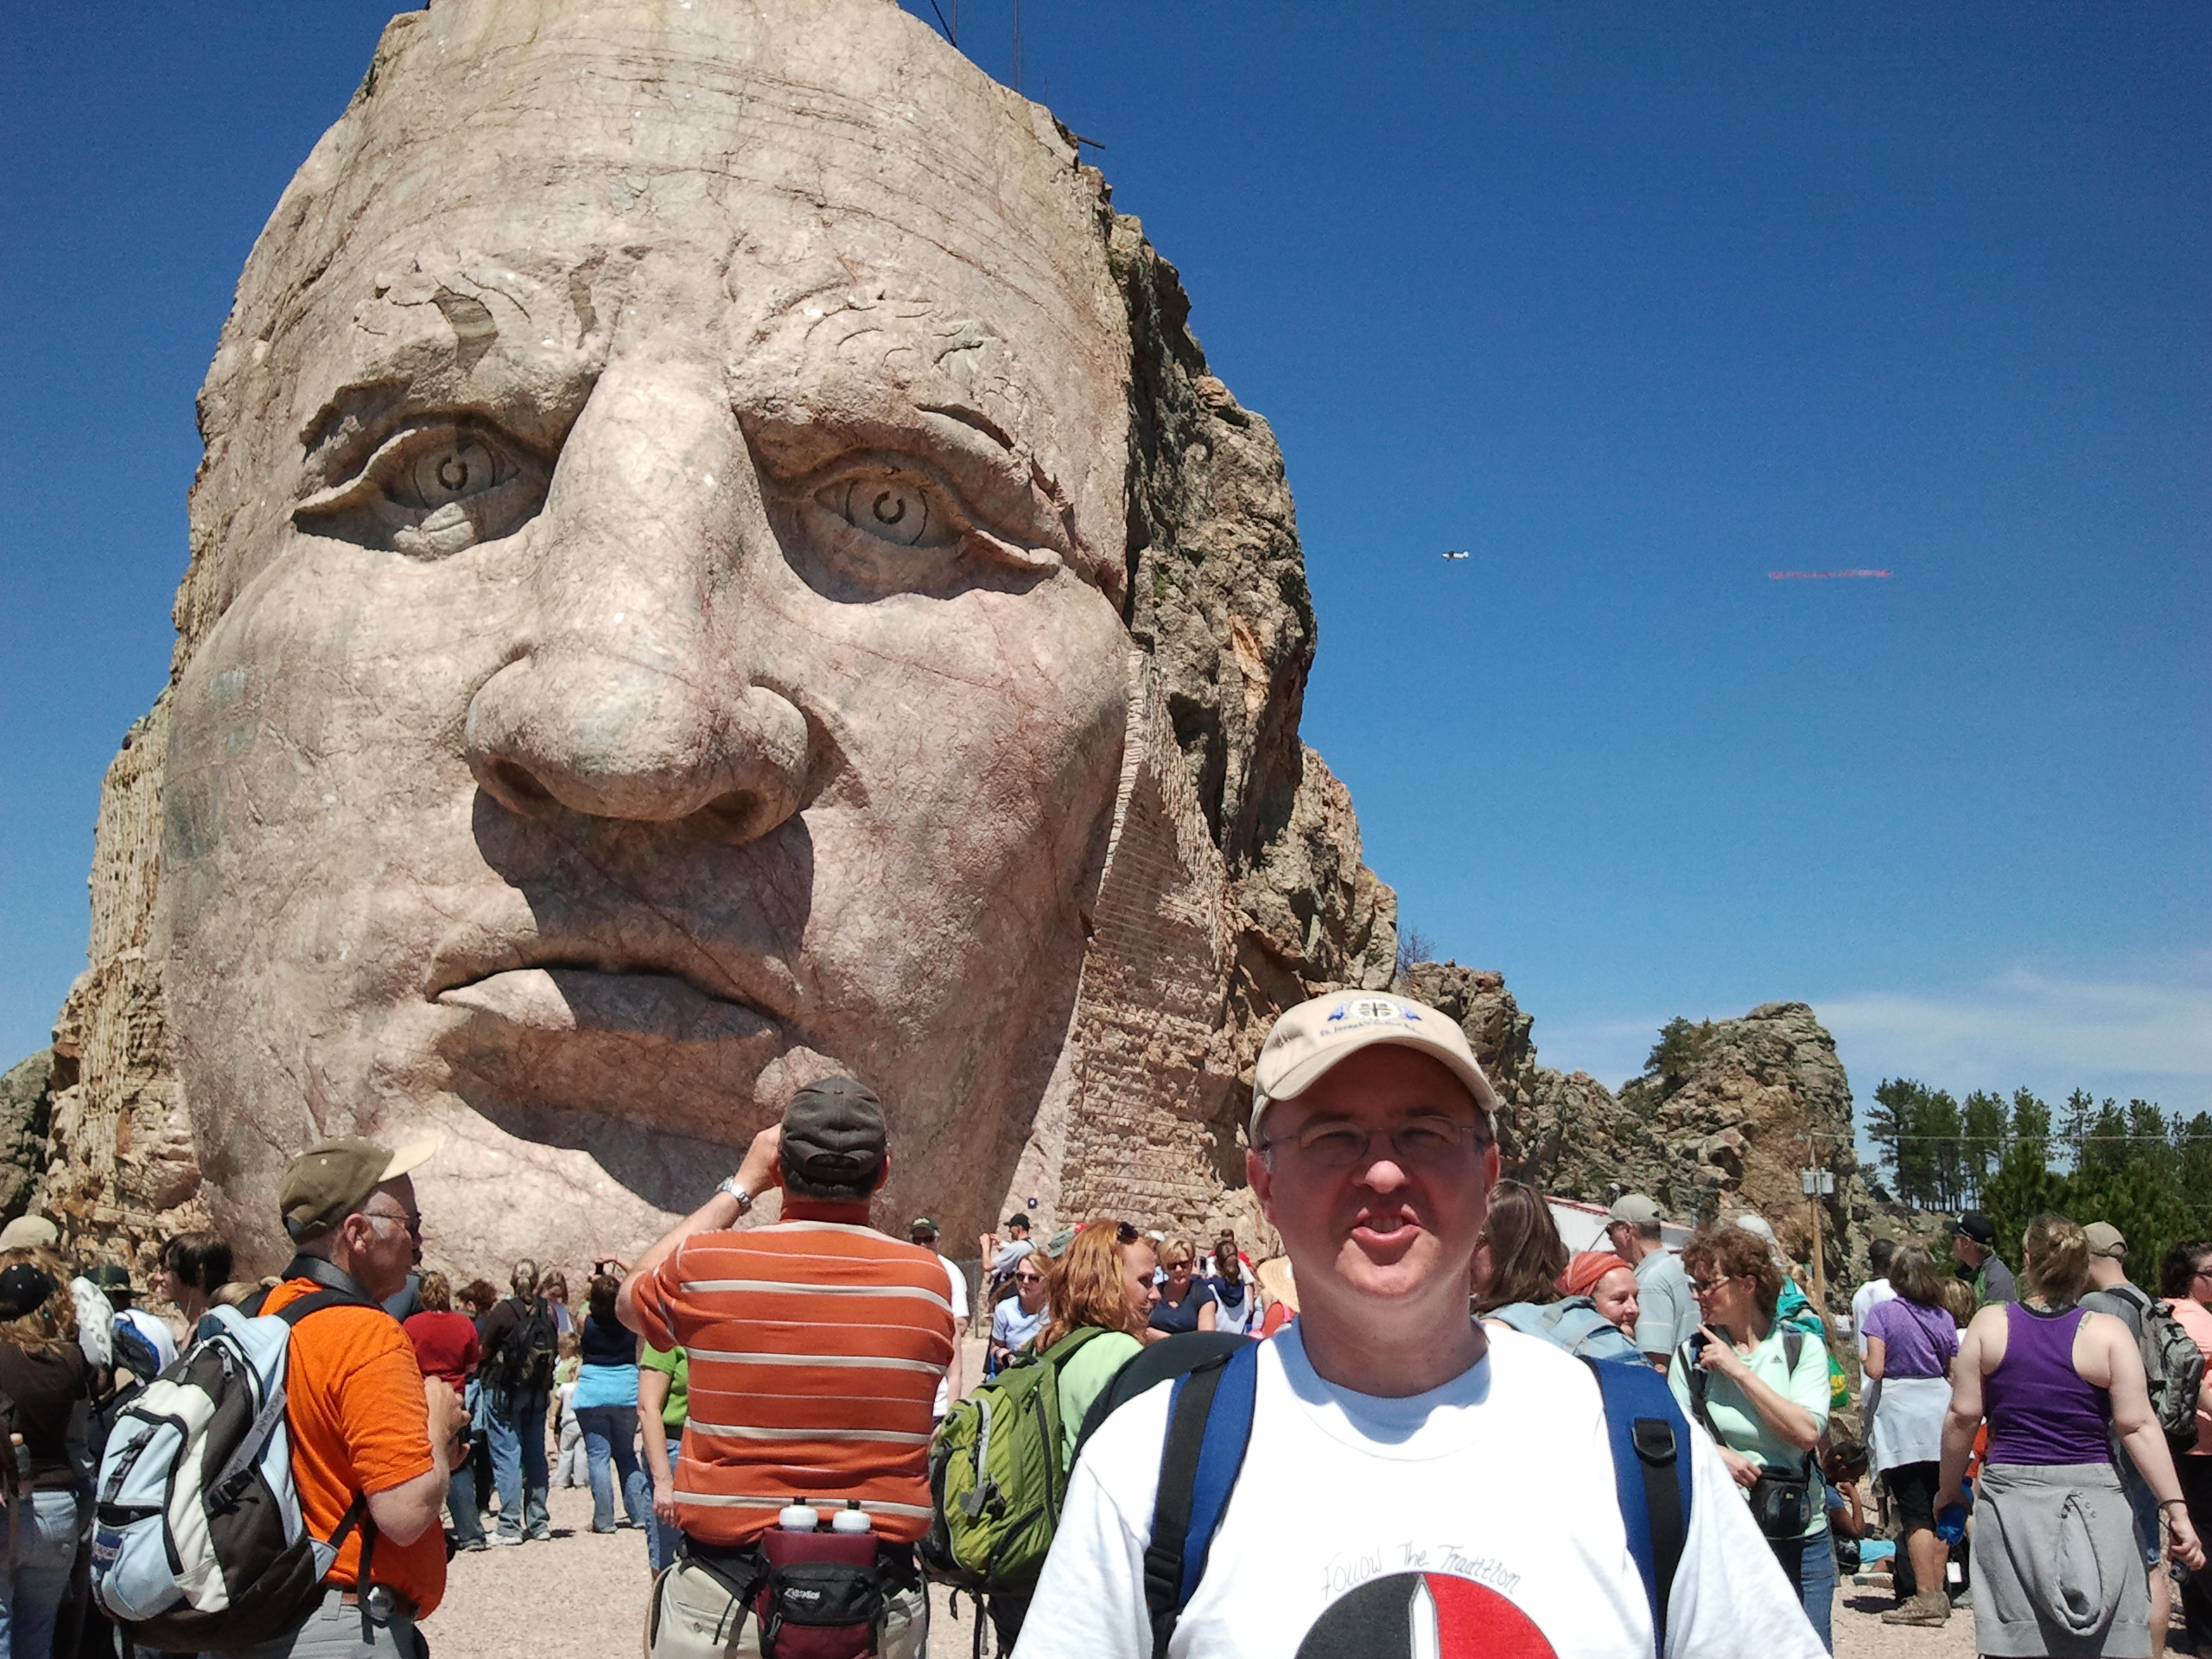 Fr. Steve at Crazy Horse Monument.